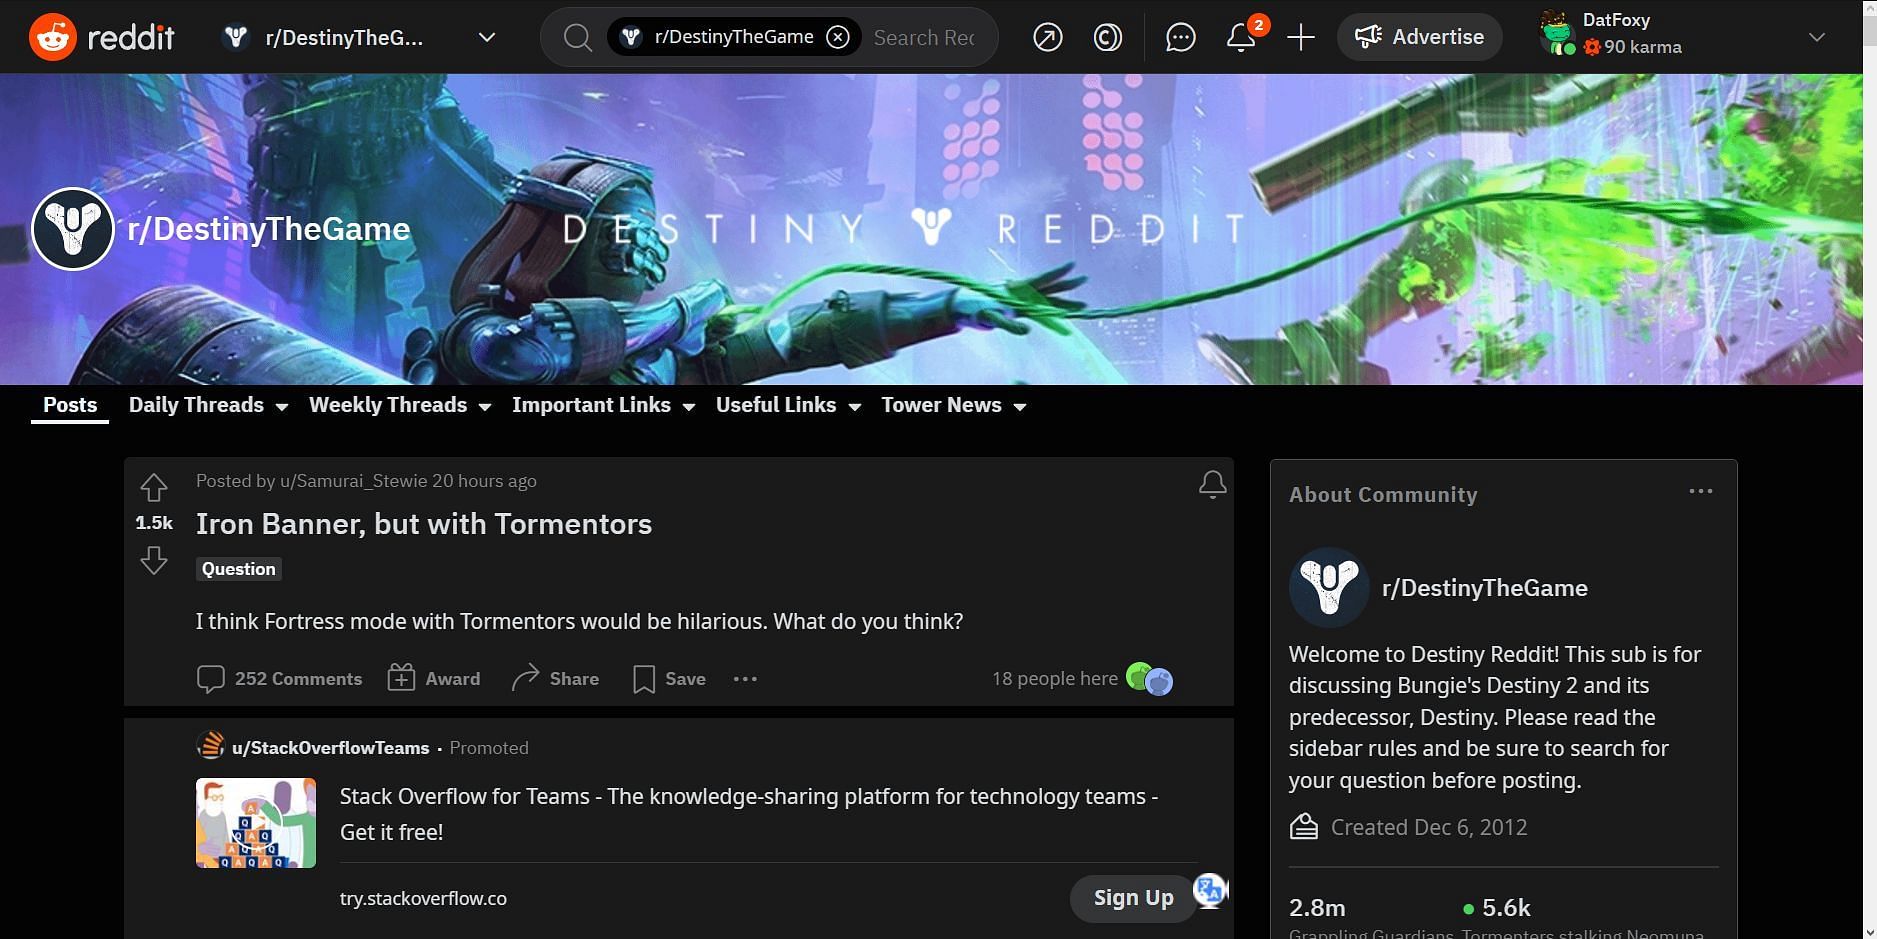 Destiny 2 Reddit post on Iron Banner and Tormentors (Image via Reddit)